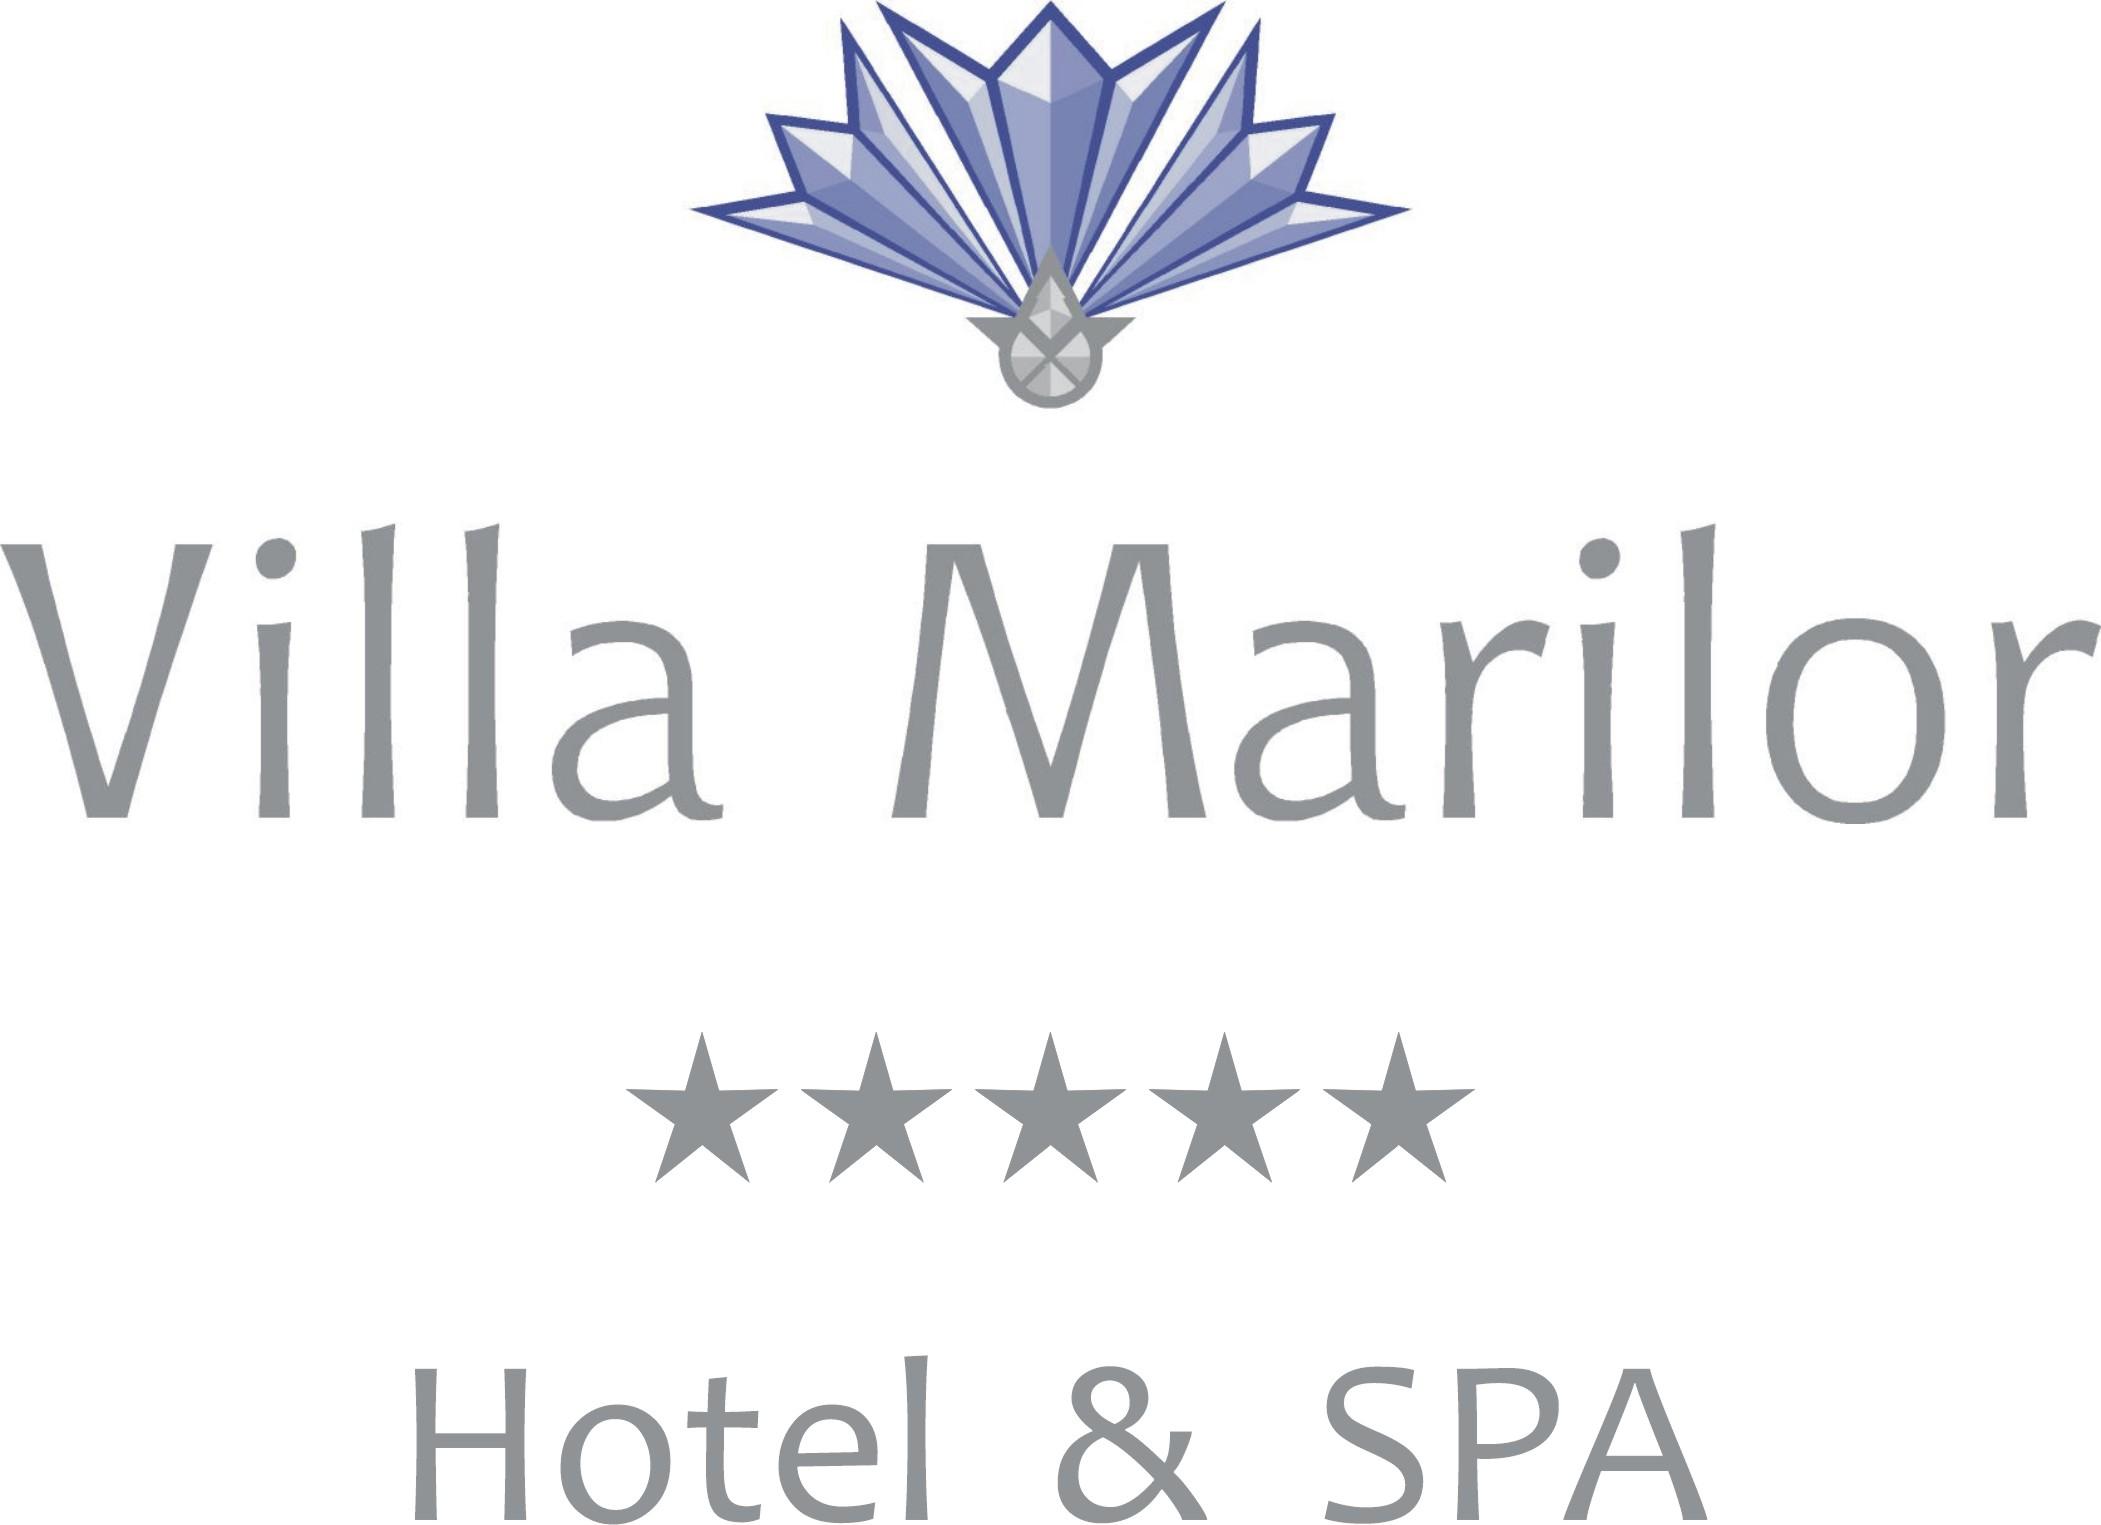 Villa Marilor Hotel & SPA Zakopane, małopolskie